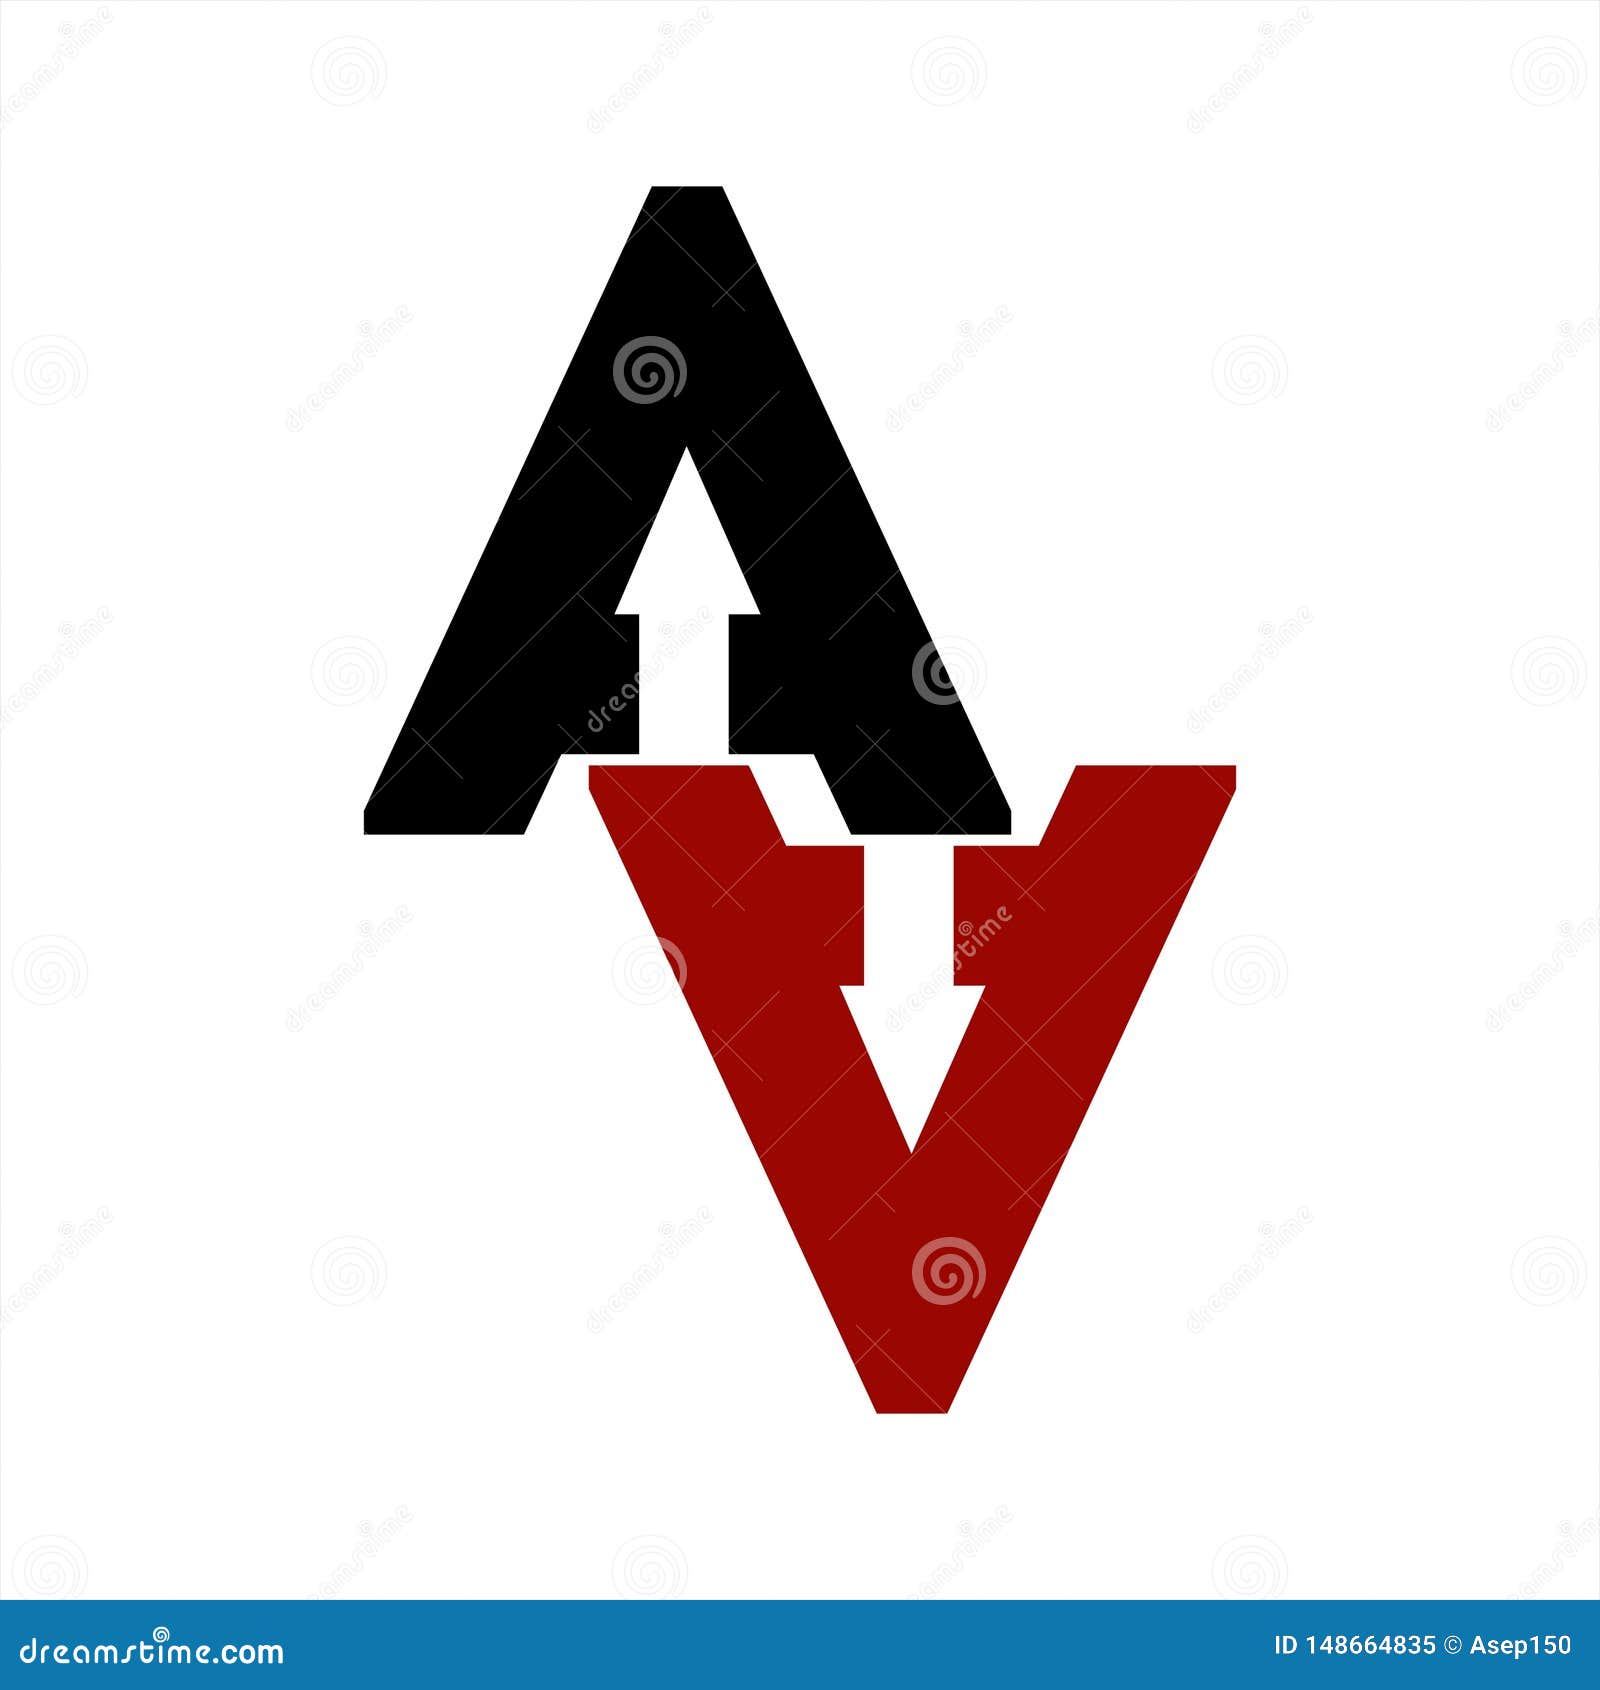 aa, ana, aza initials geometric letter company  logo and icon